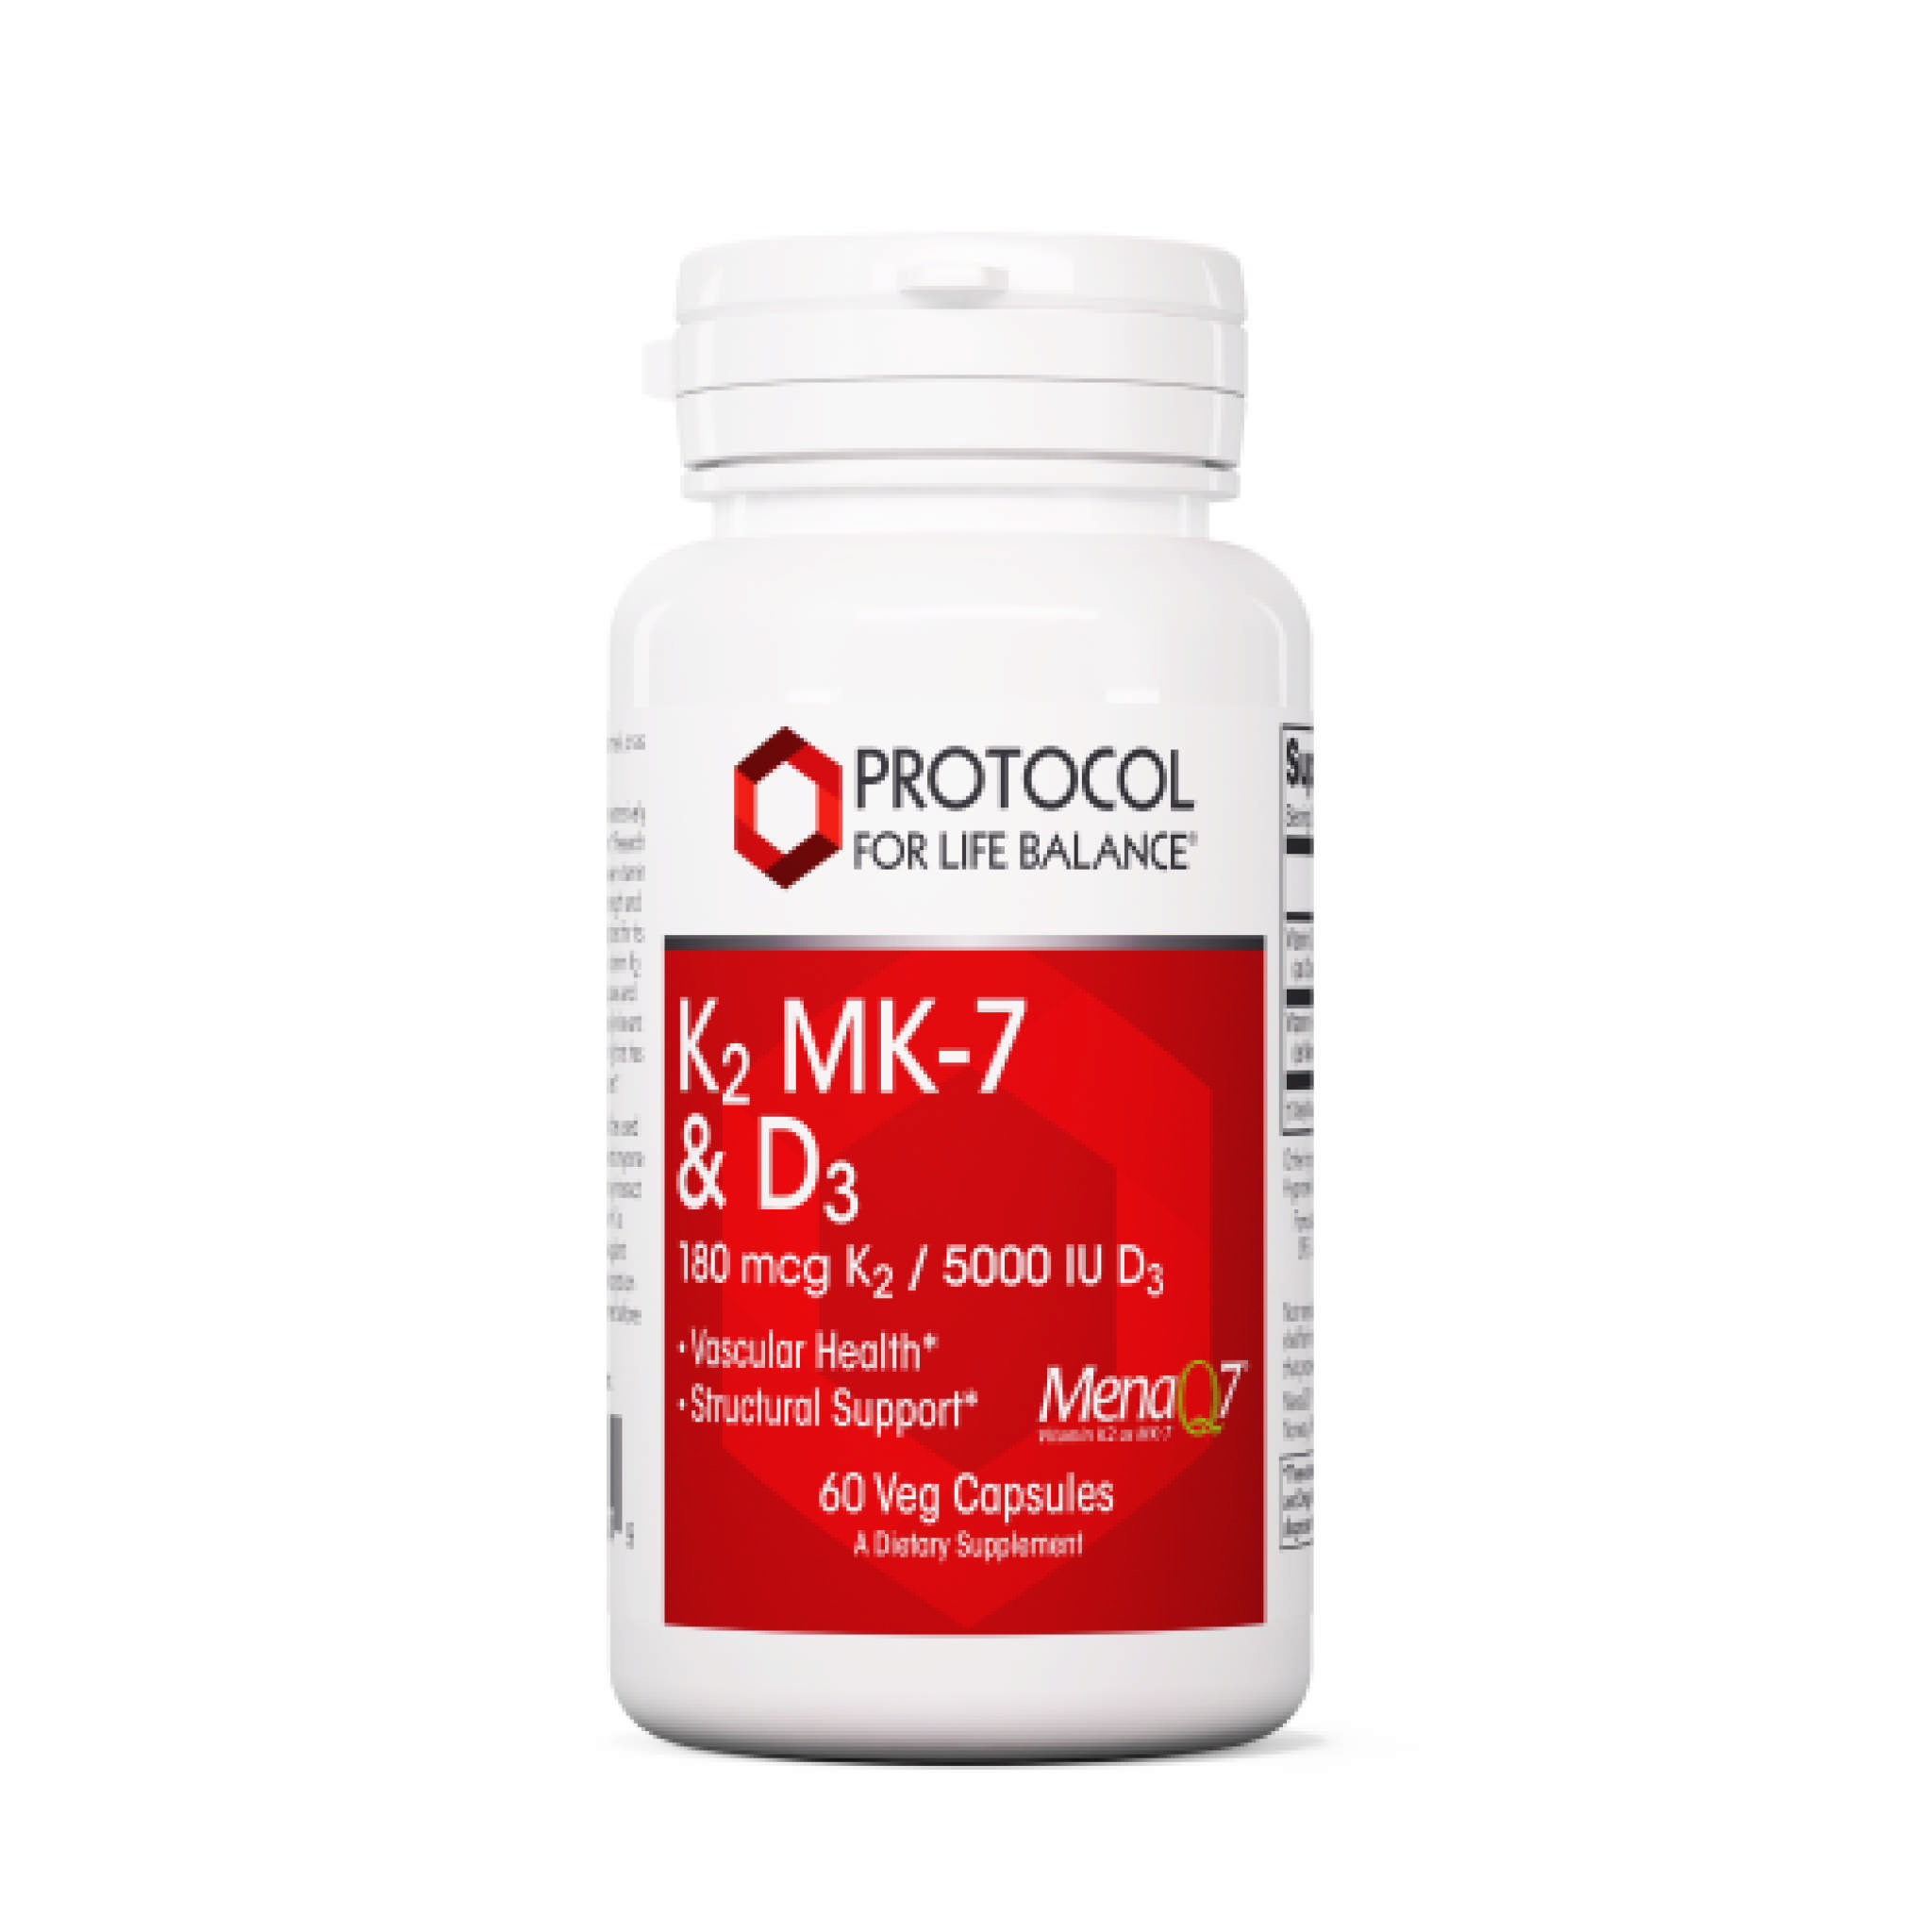 Protocol For Life Balance - K2 Mk7 & D3 vCap 180 mcg/5000